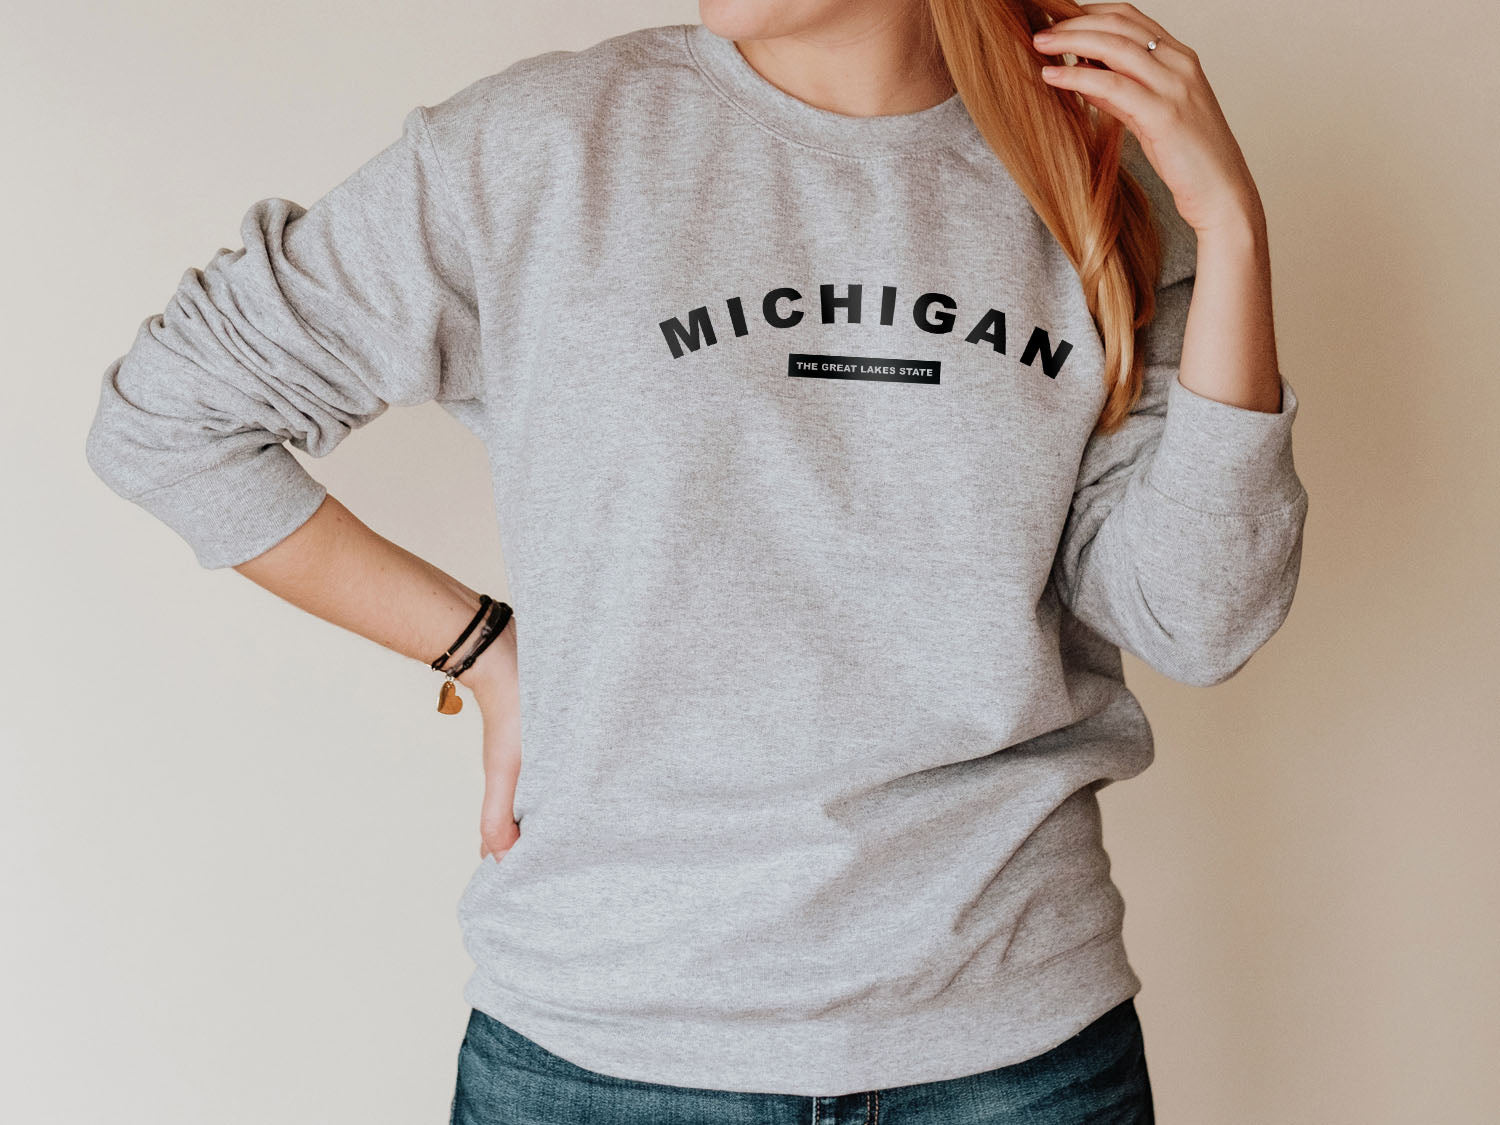 Michigan The Great Lakes State Sweatshirt - United States Name & Slogan Minimal Design Printed Sweatshirt